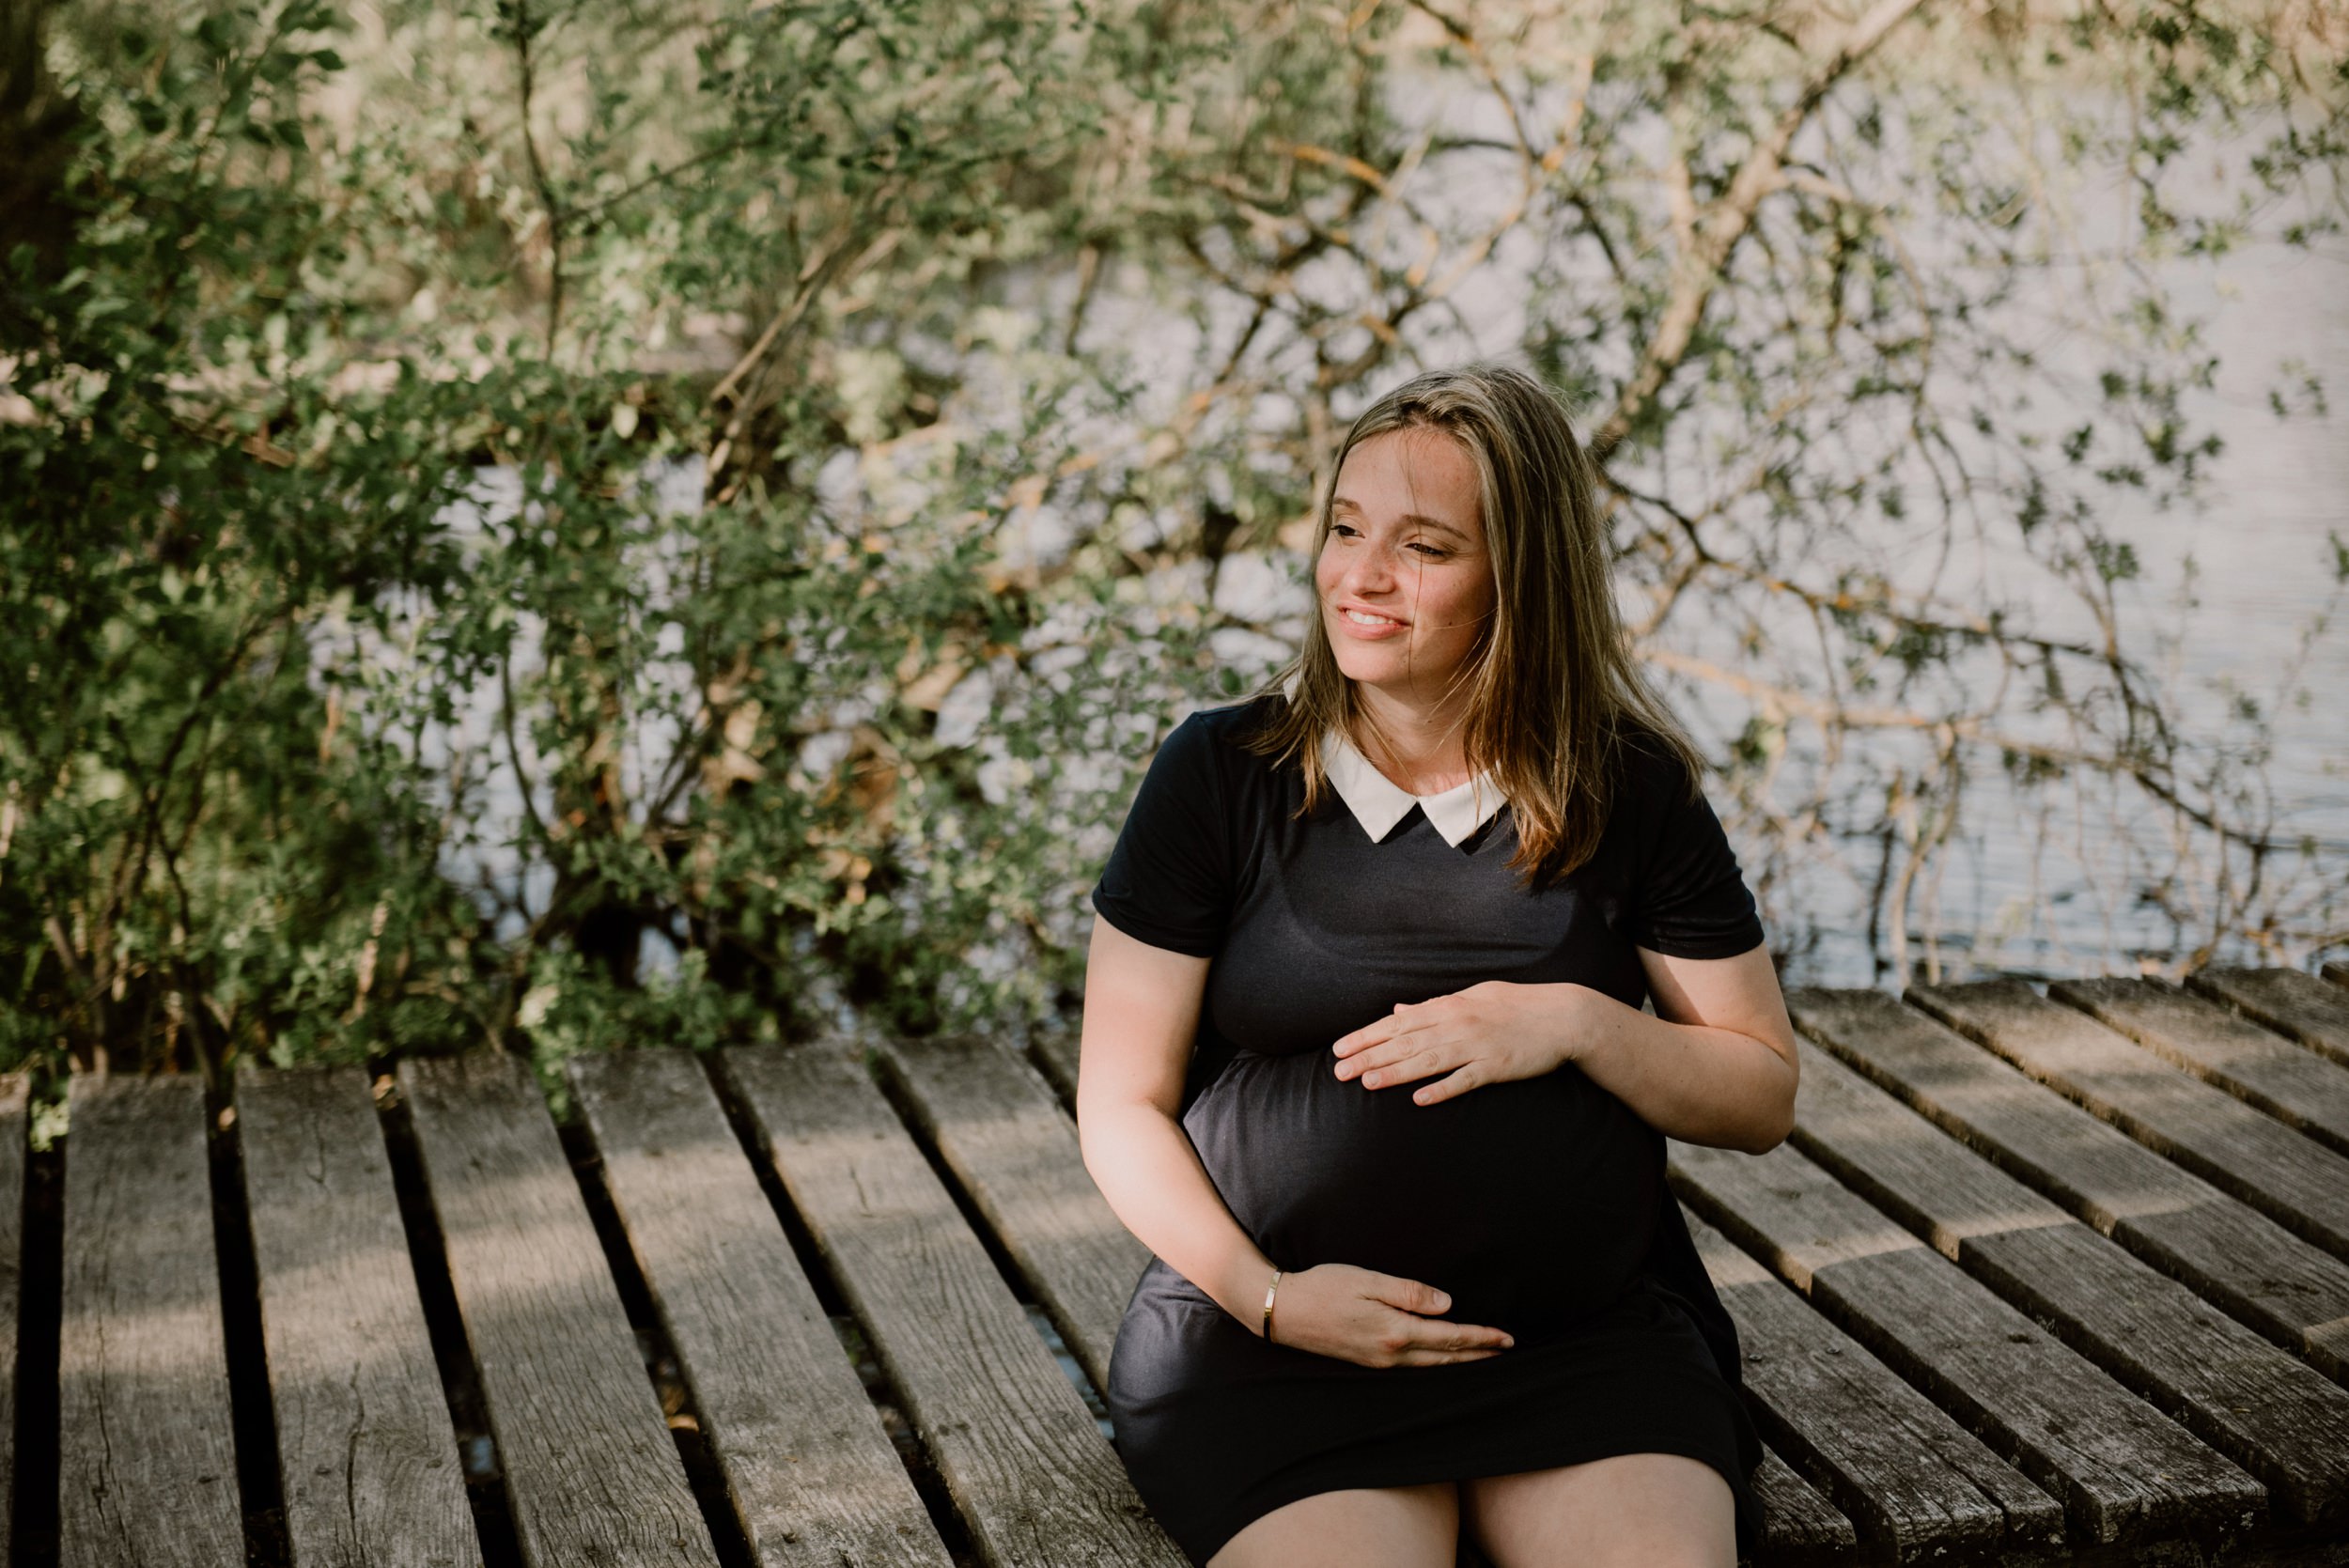 photographe grossesse grenoble chambery femme enceinte coucher soleil champs ble photo maternite_0020